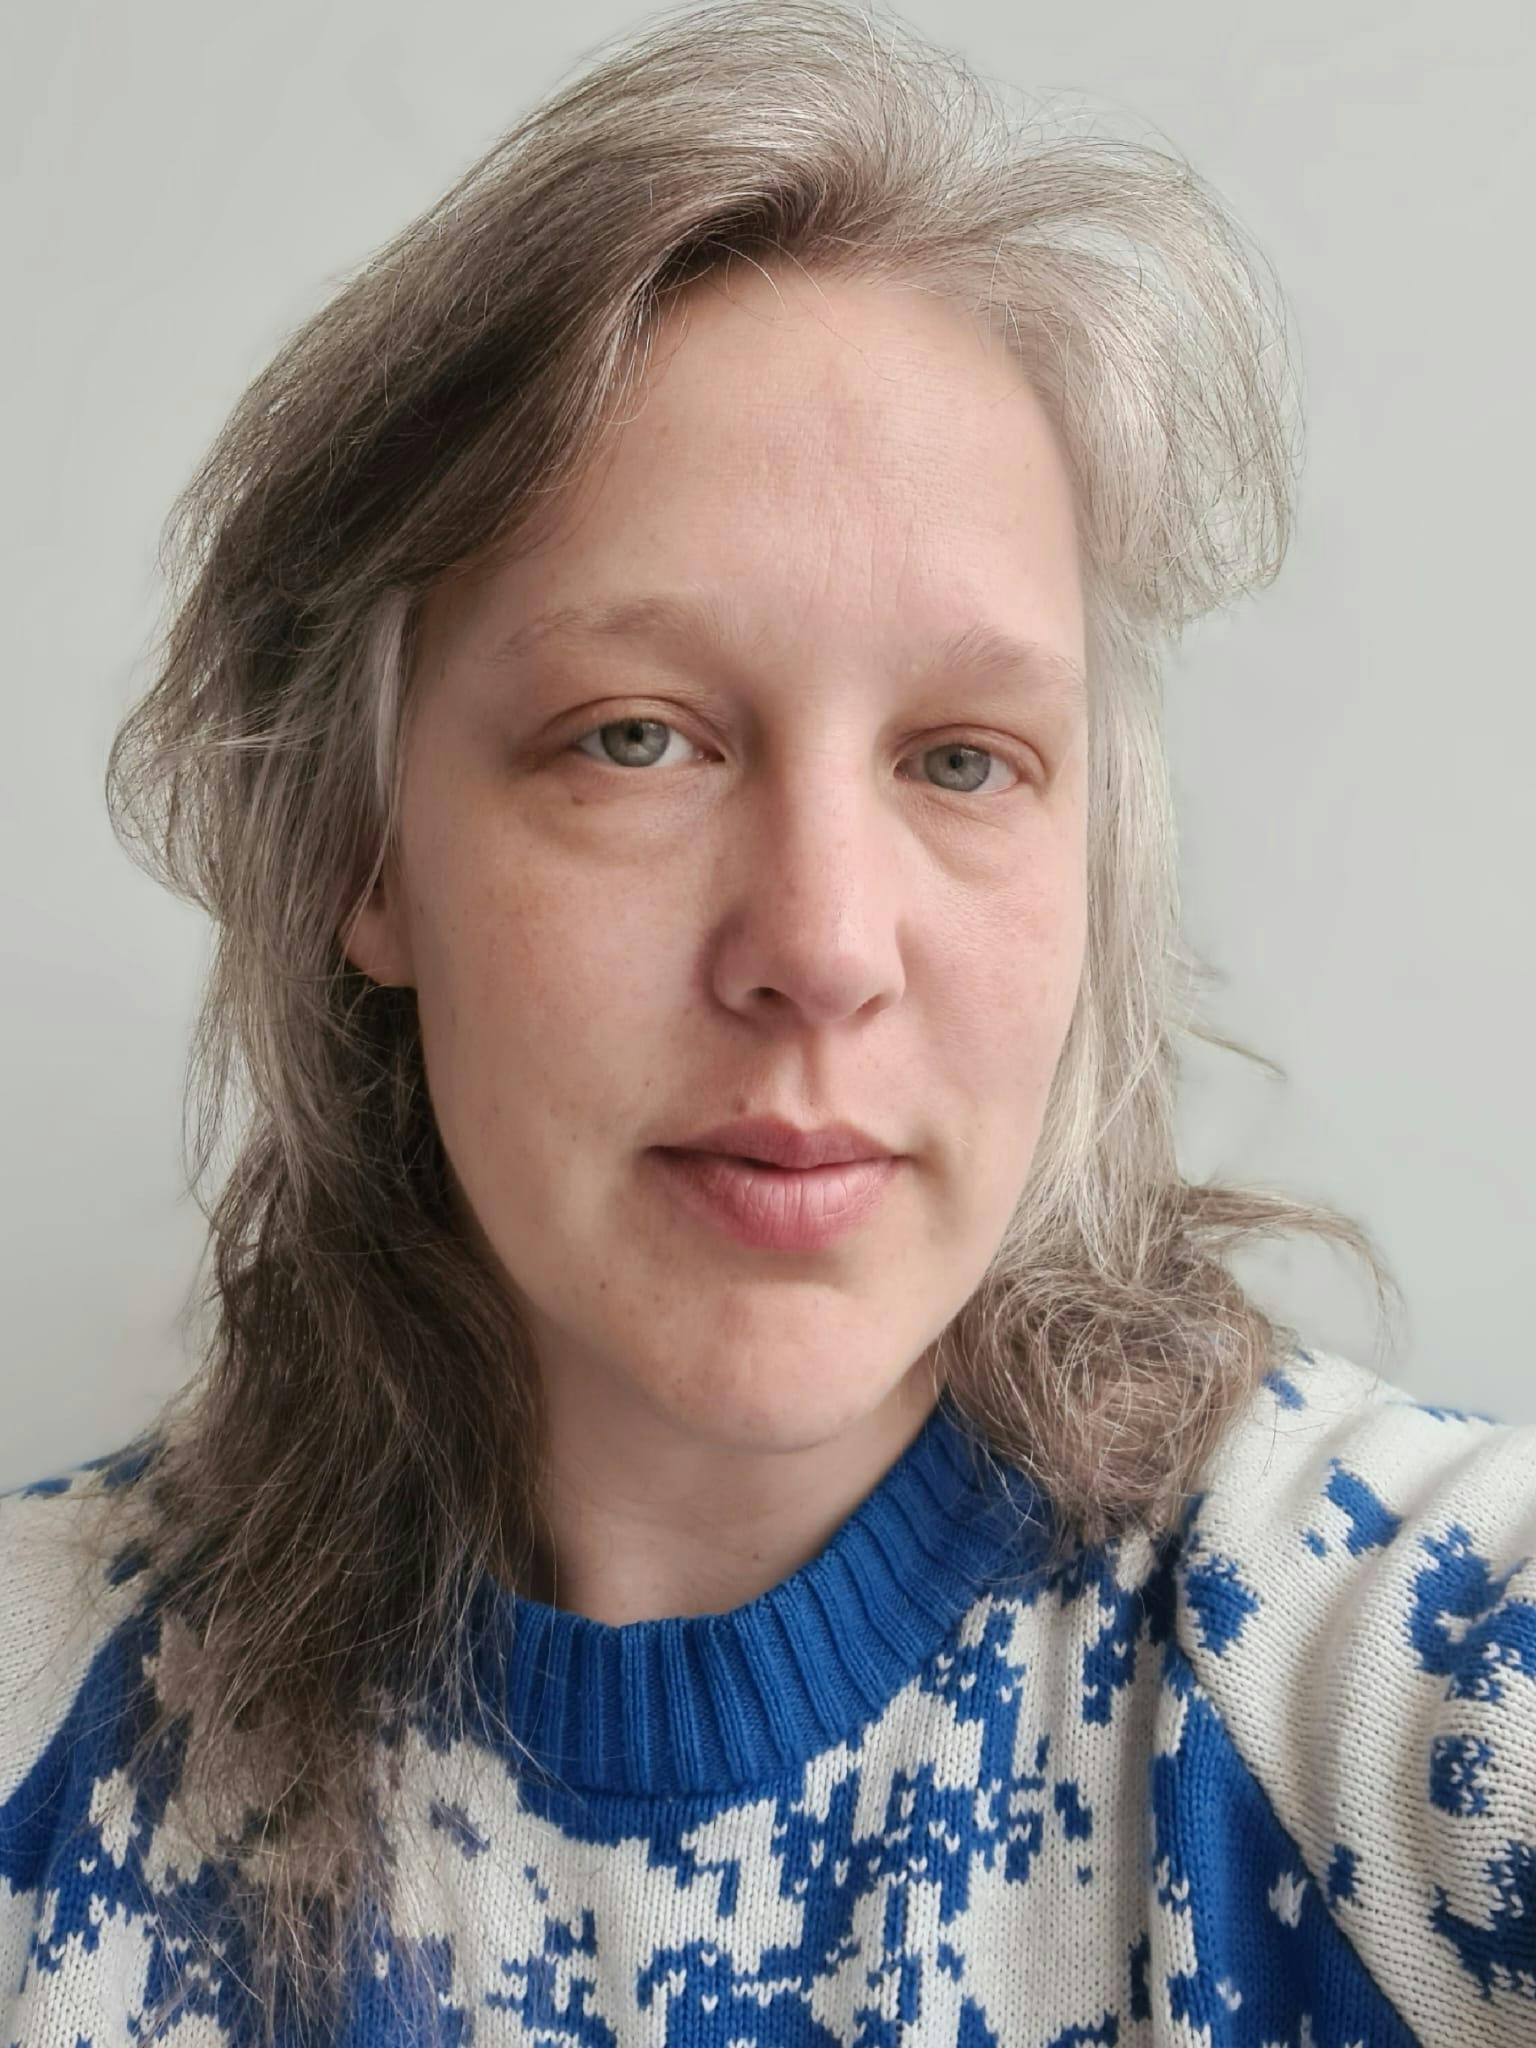 Author's profile image